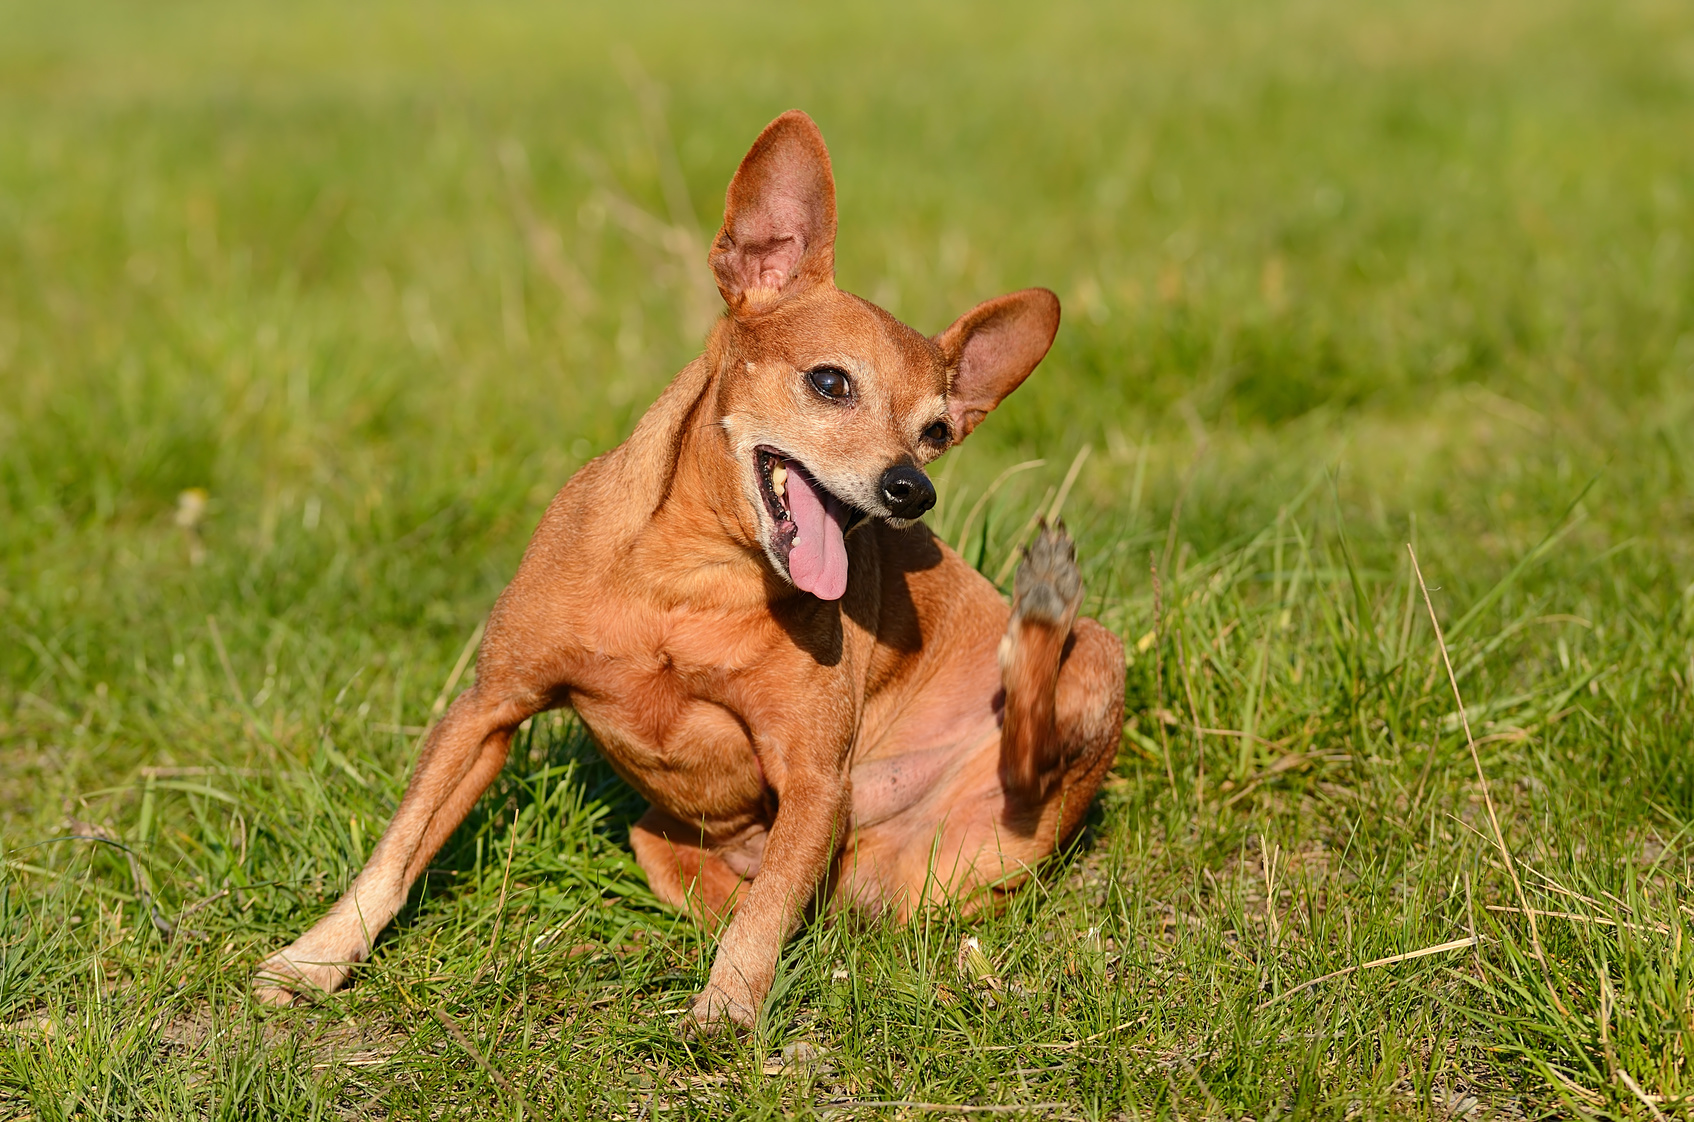 flea allergy dermatitis dogs home remedy